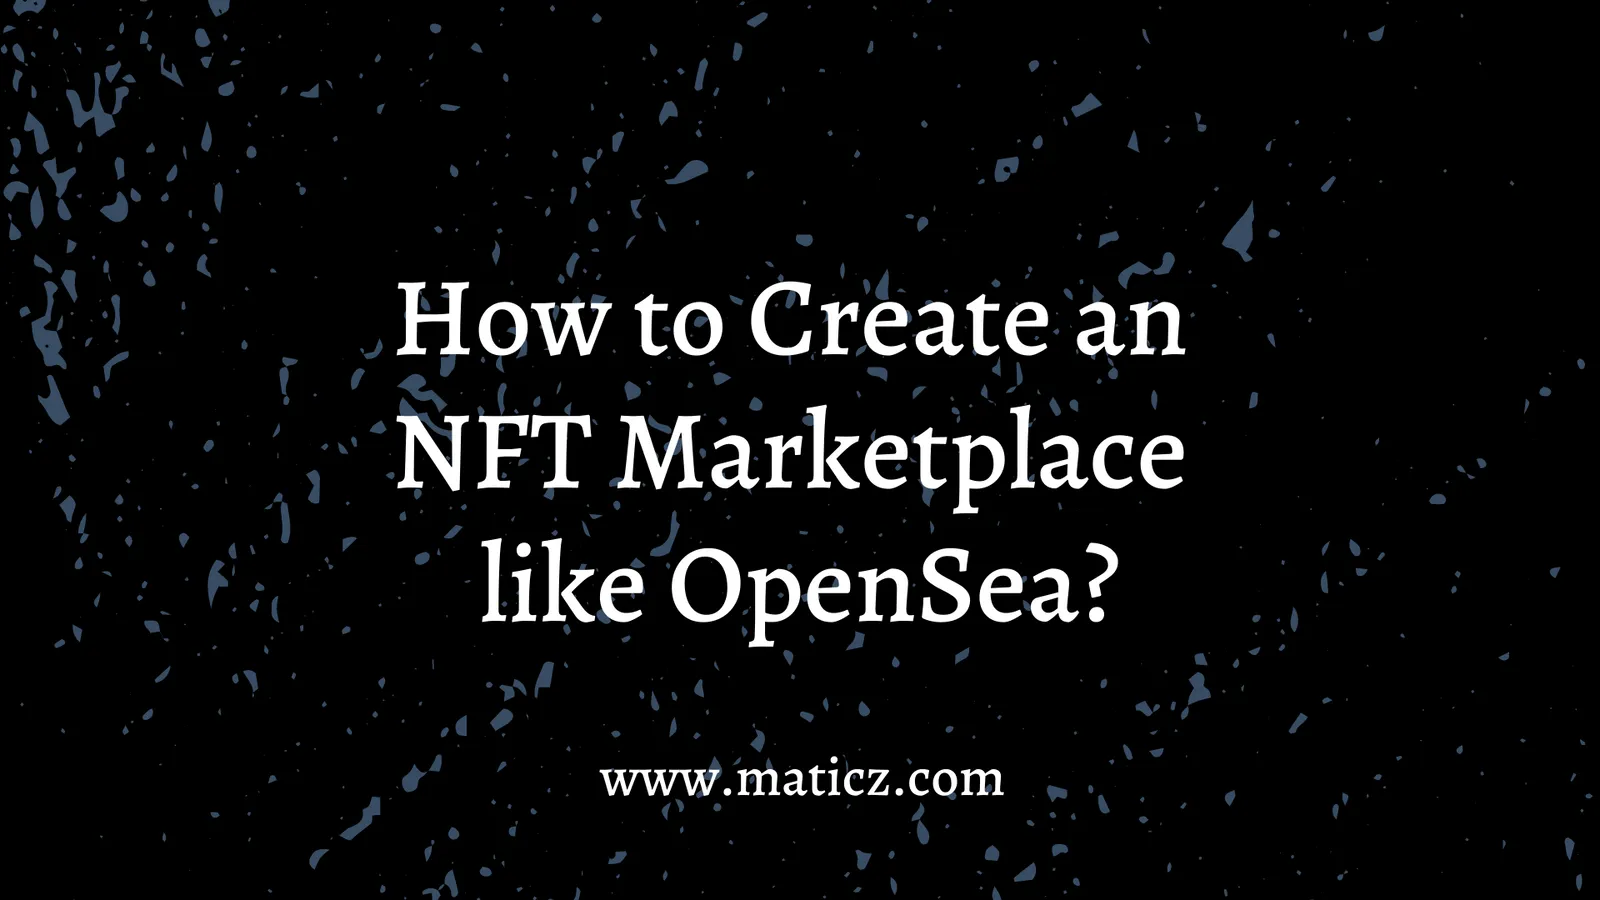 OpenSea Clone - How to launch an NFT Marketplace like OpenSea?